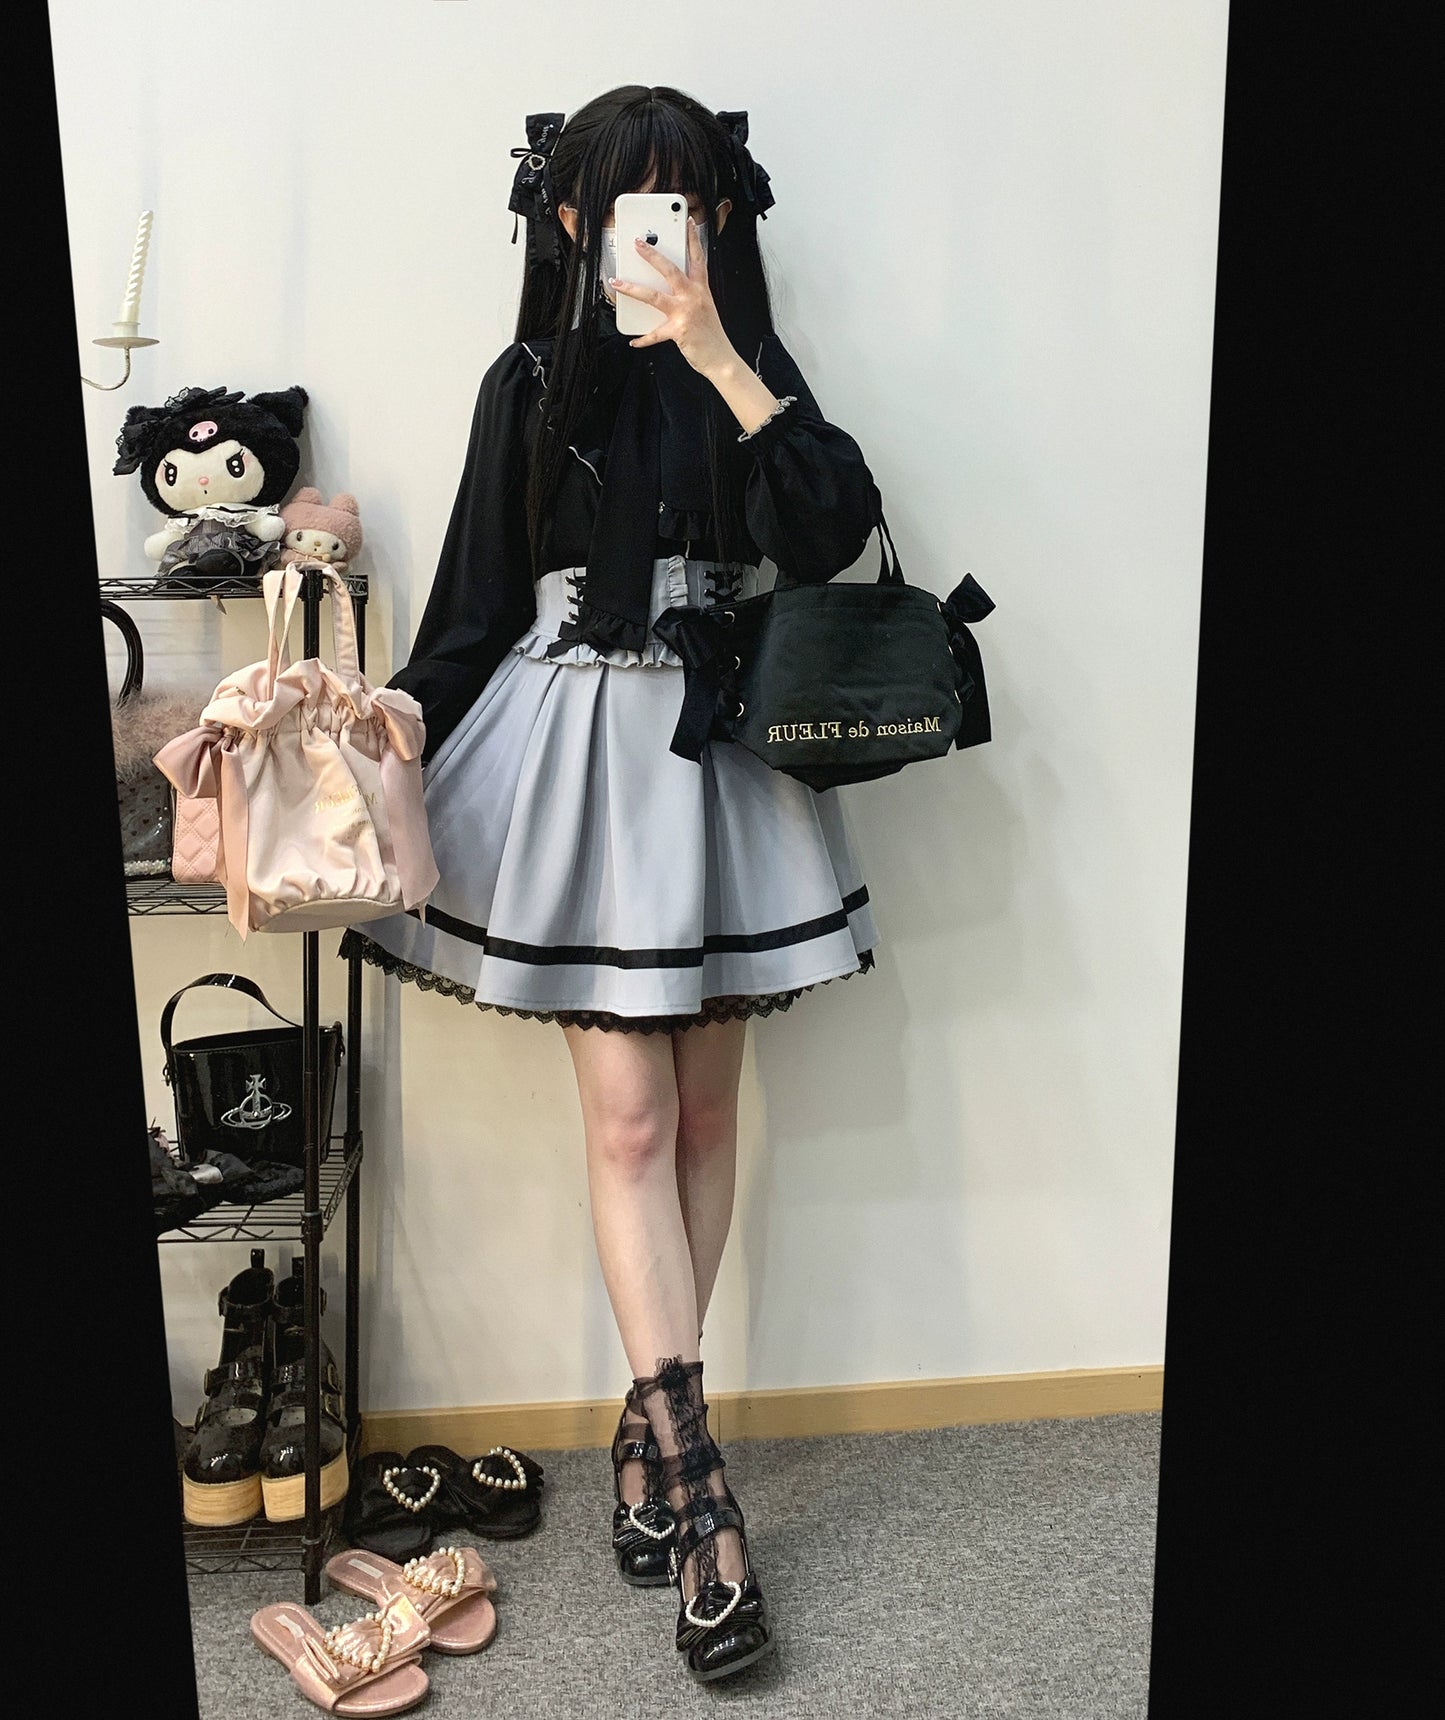 Jirai Kei Skirt High Waist Lace Up Skirt With Bow Tie 31860:396694